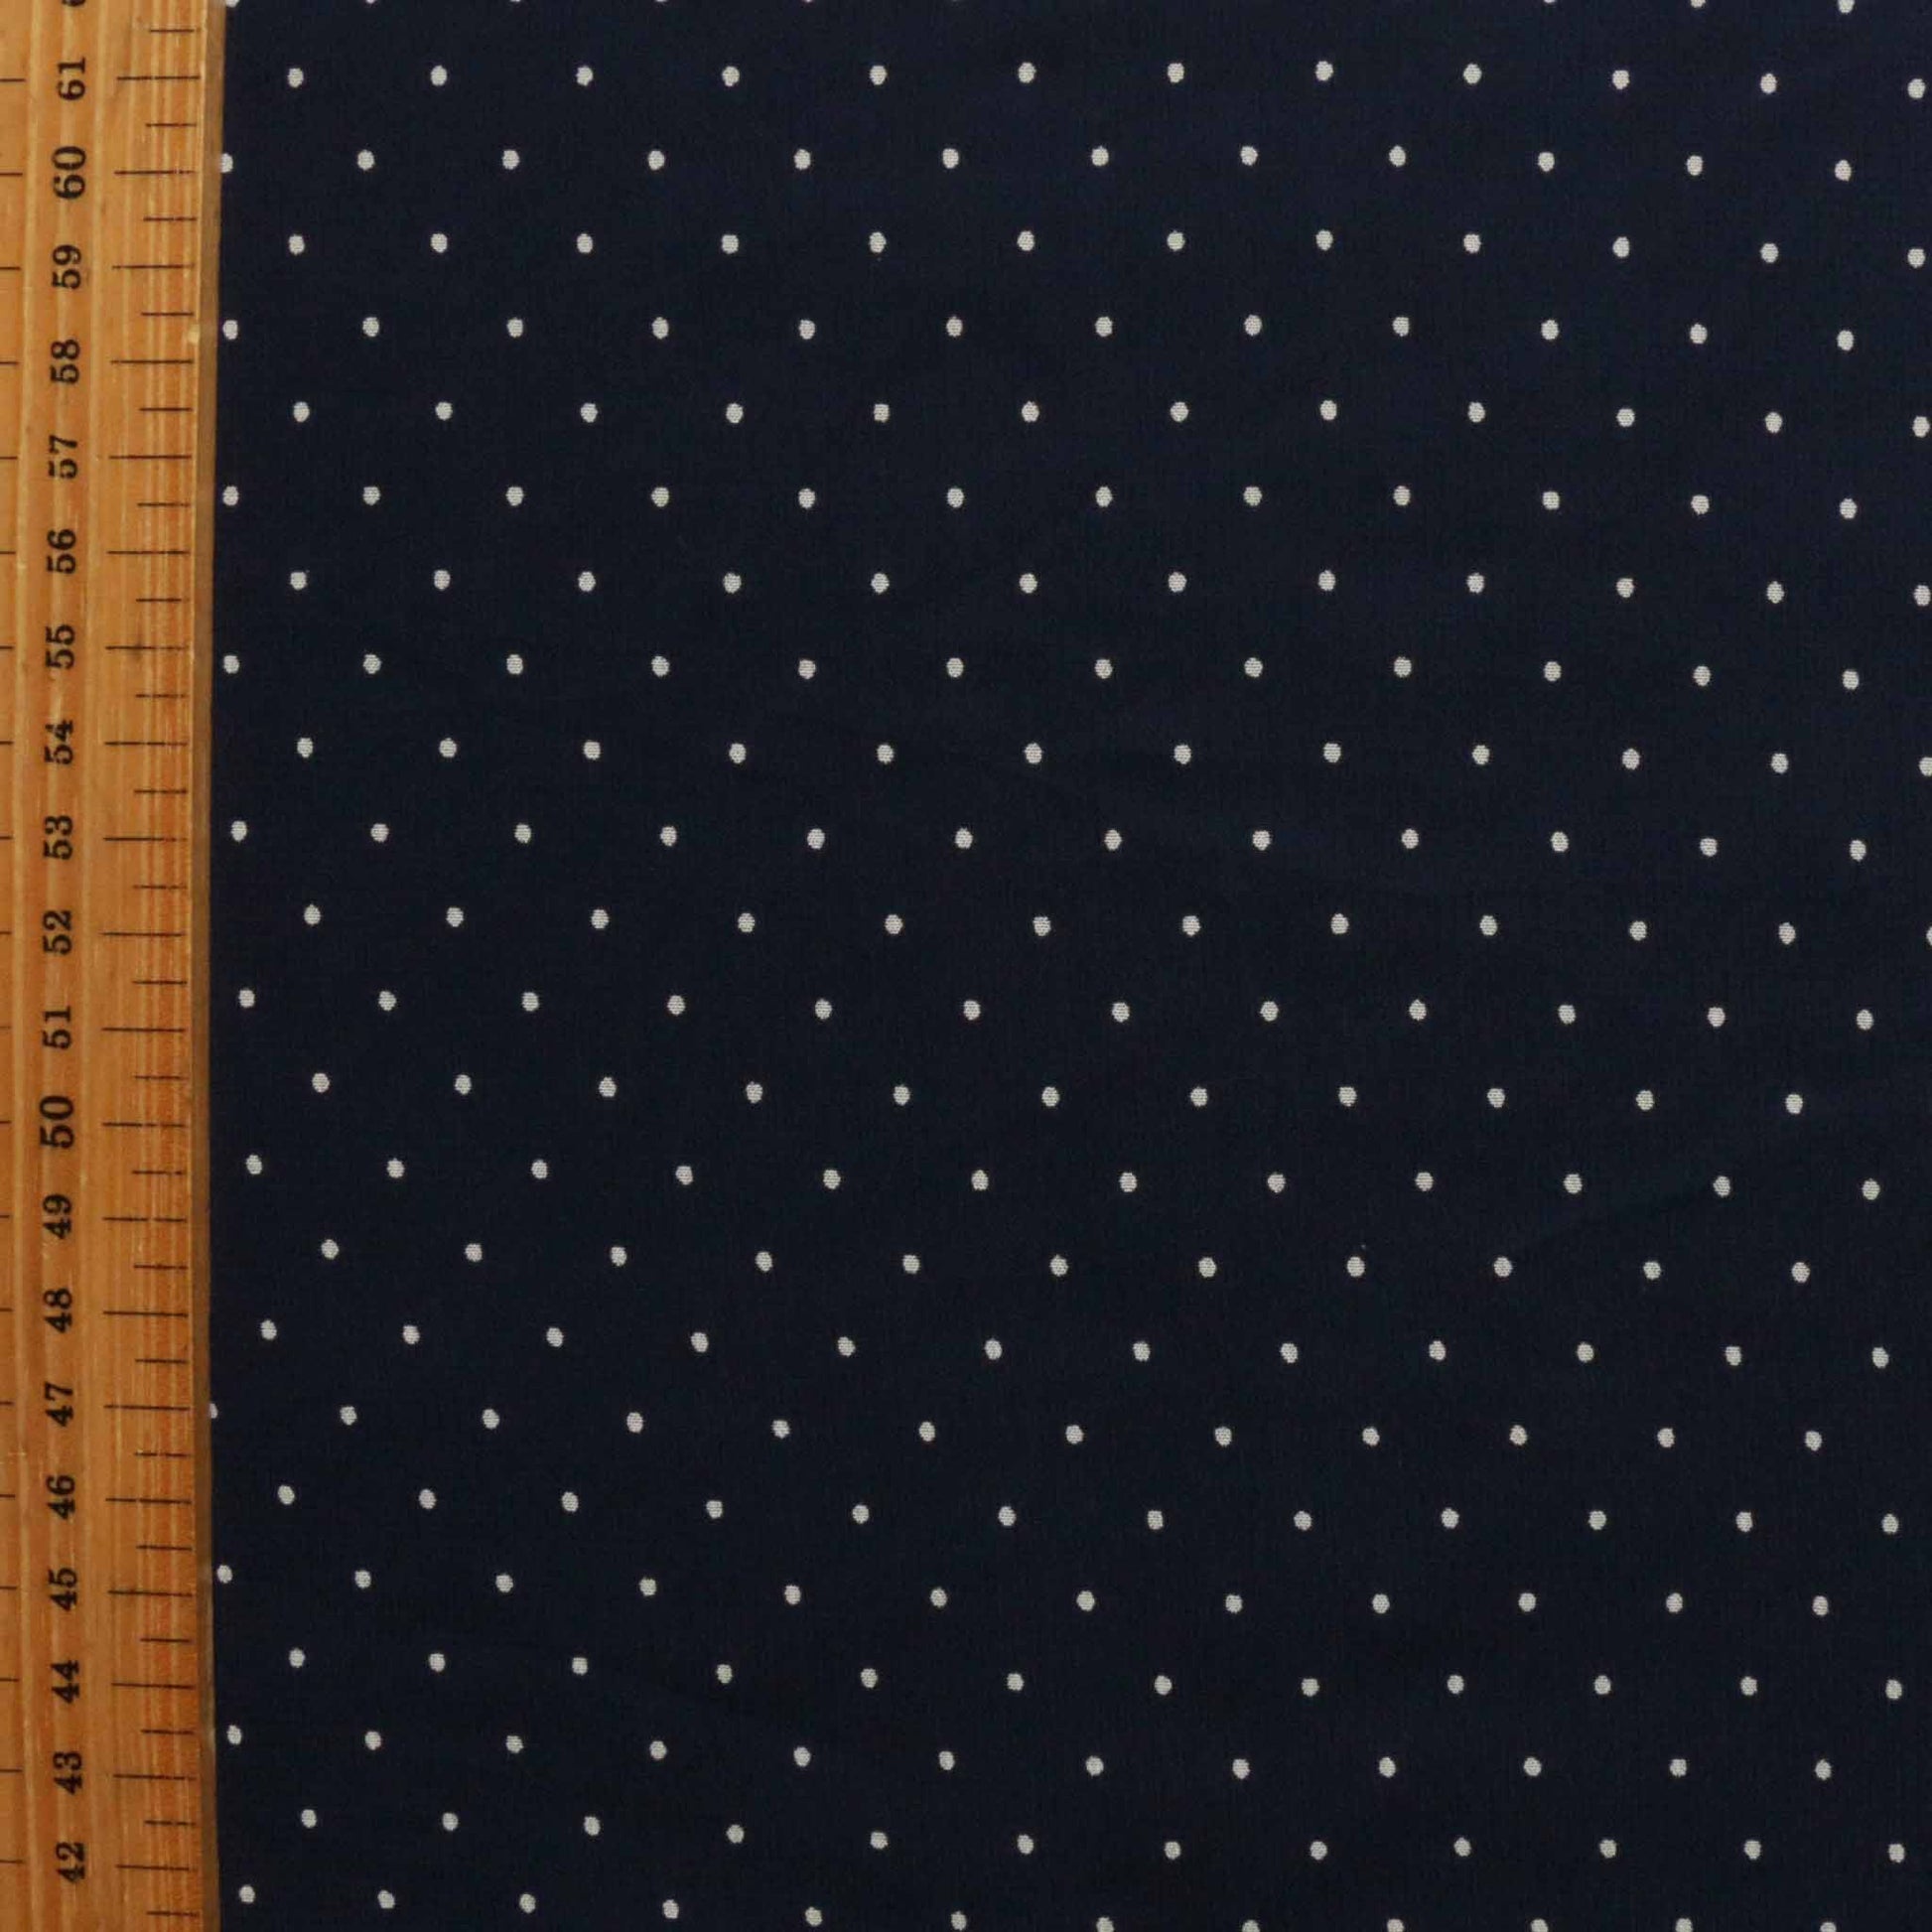 metre polka dot printed blue chiffon viscose fabric for dressmaking